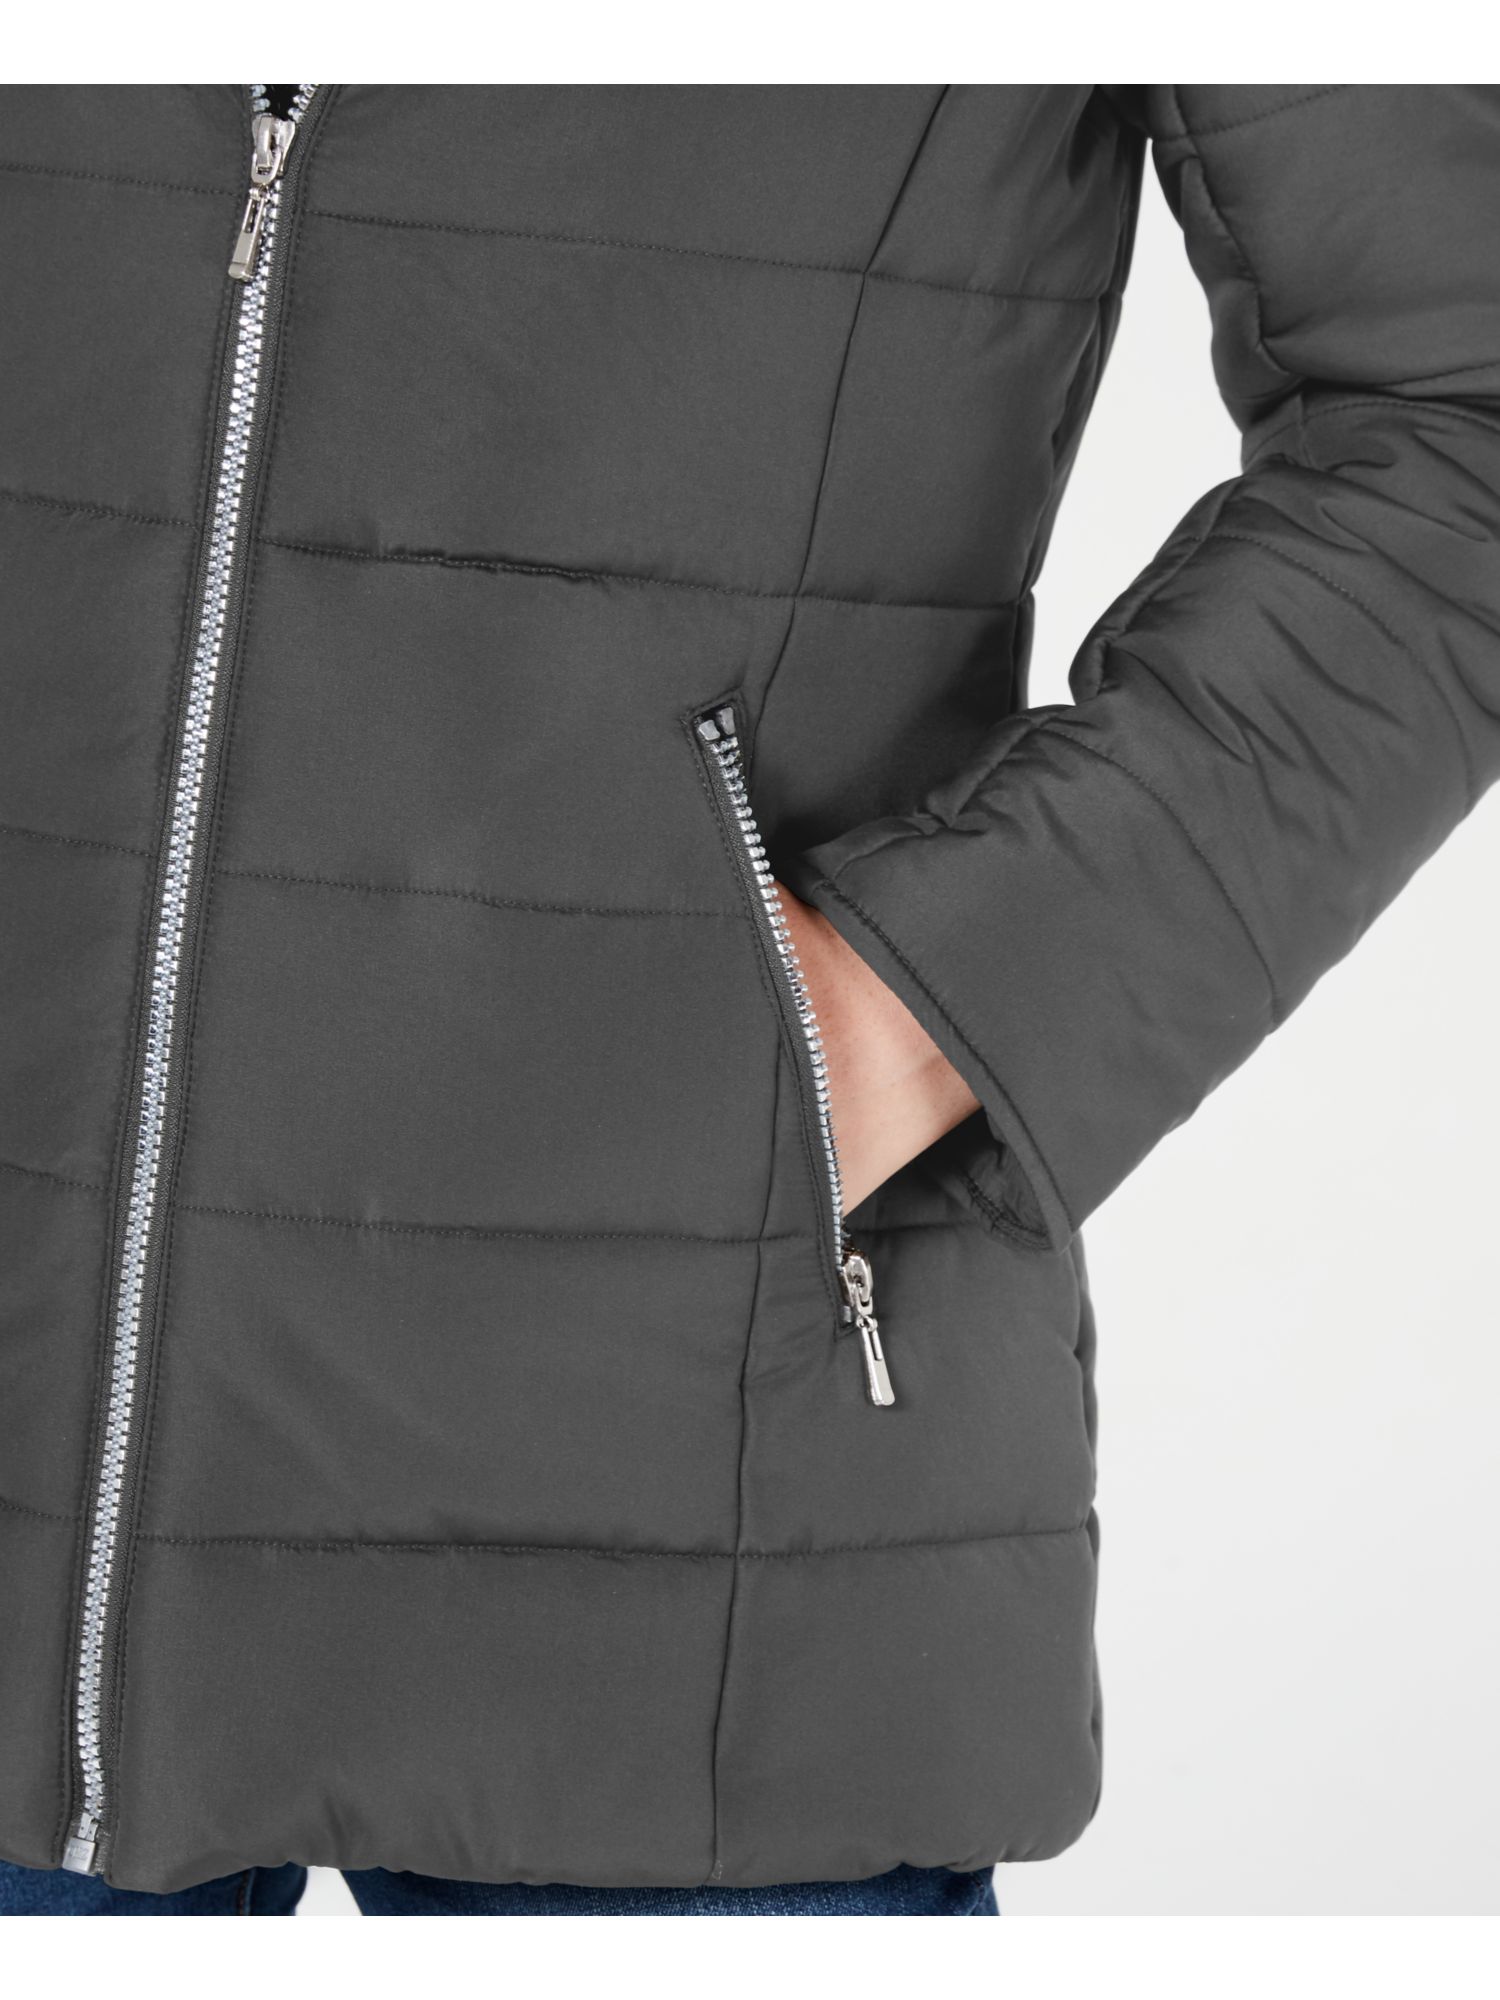 MARALYN & ME Womens Gray Faux Fur Hooded Water Resistant Puffer Winter Jacket Coat M - image 2 of 2